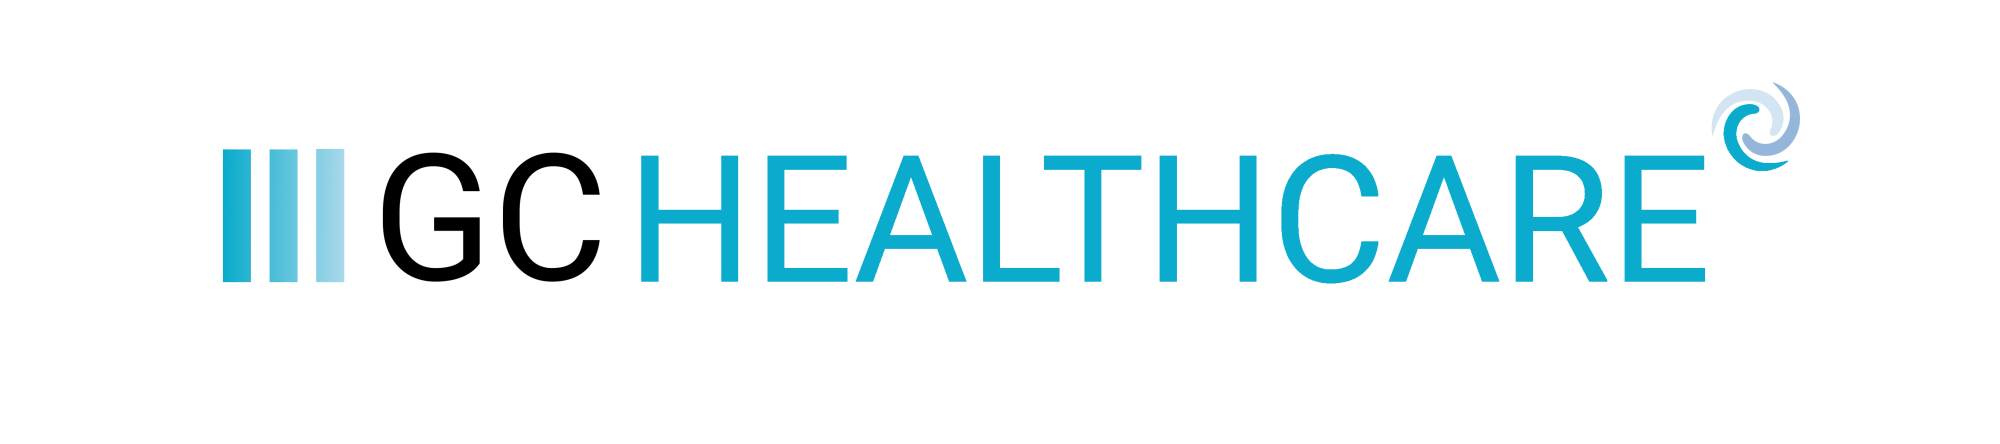 GC Healthcare ApSs logo